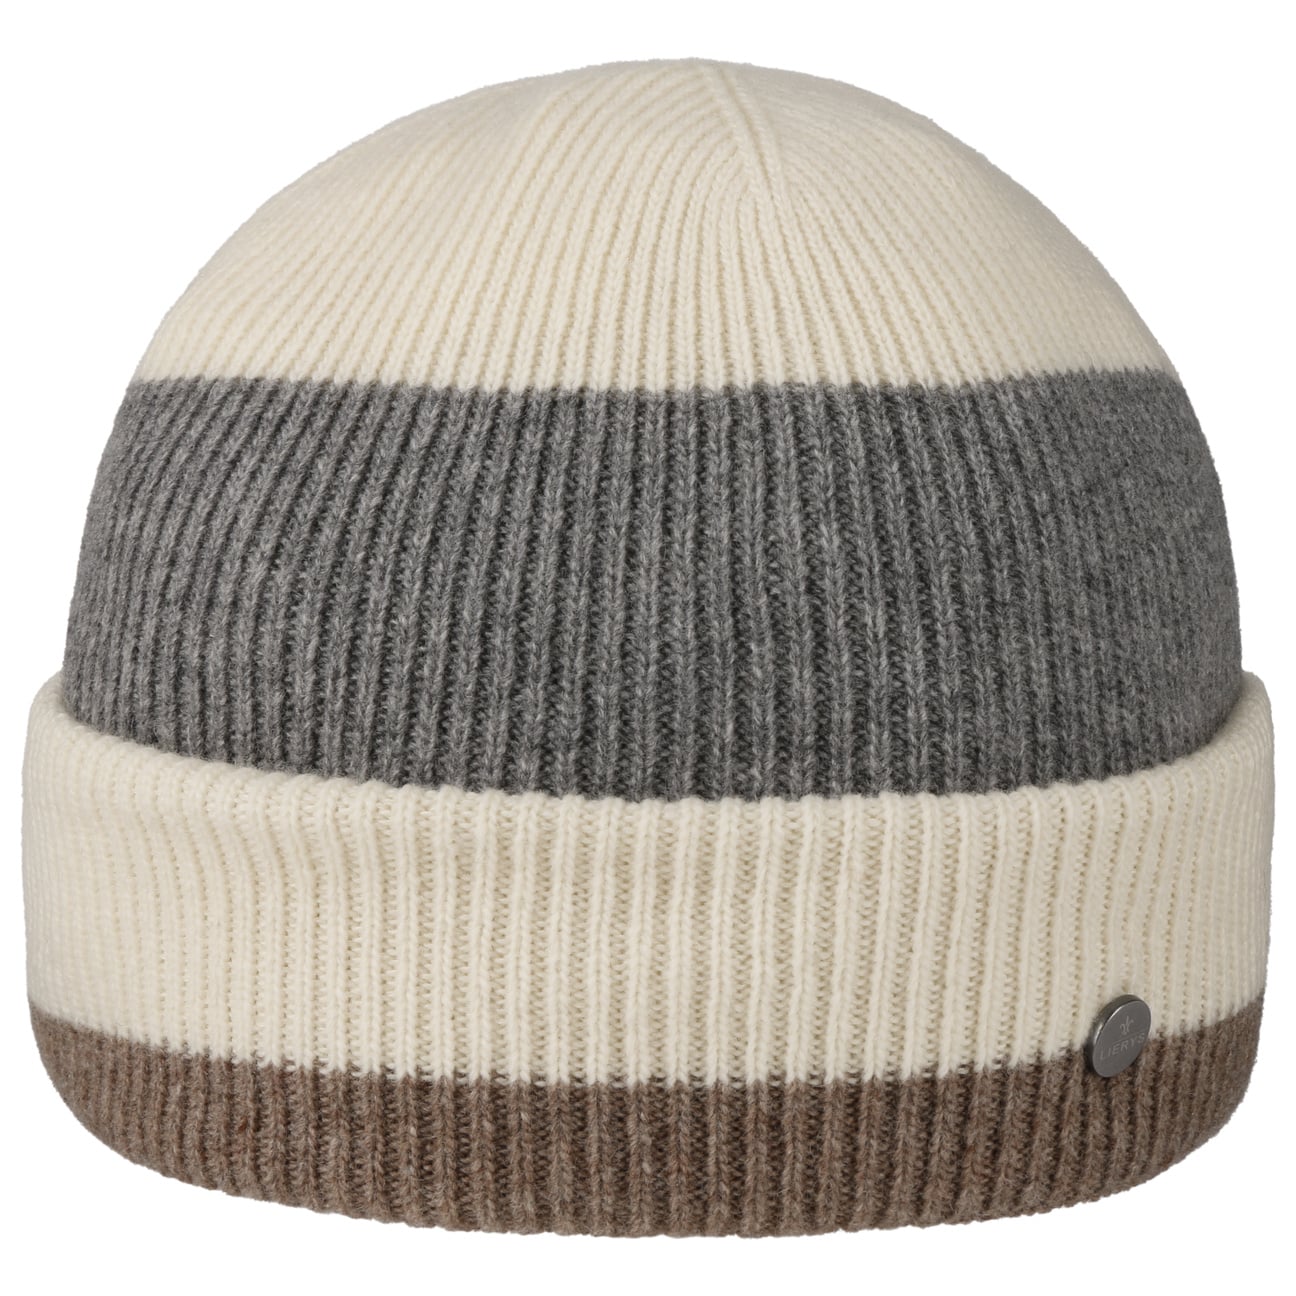 Merino Wool Knit Beanie Hat